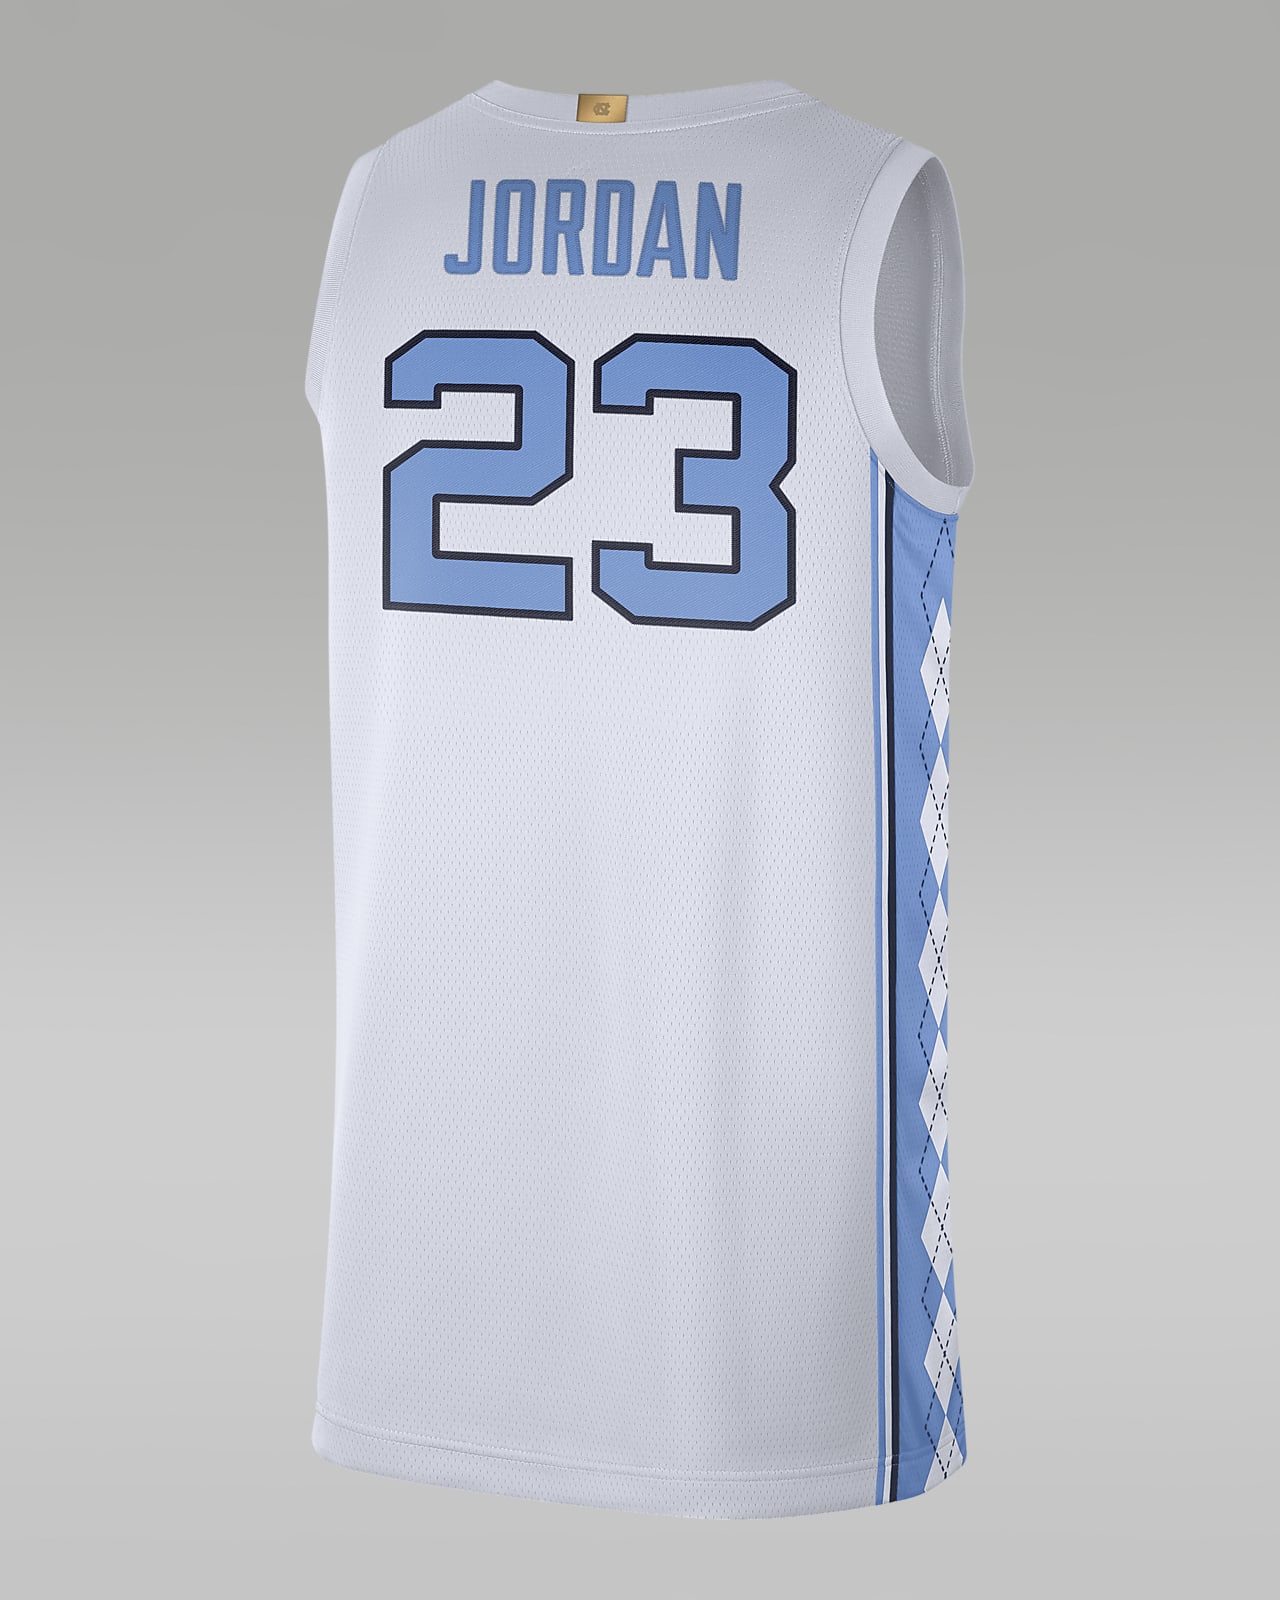 Jordan College (UNC) Men's Limited Basketball Jersey.